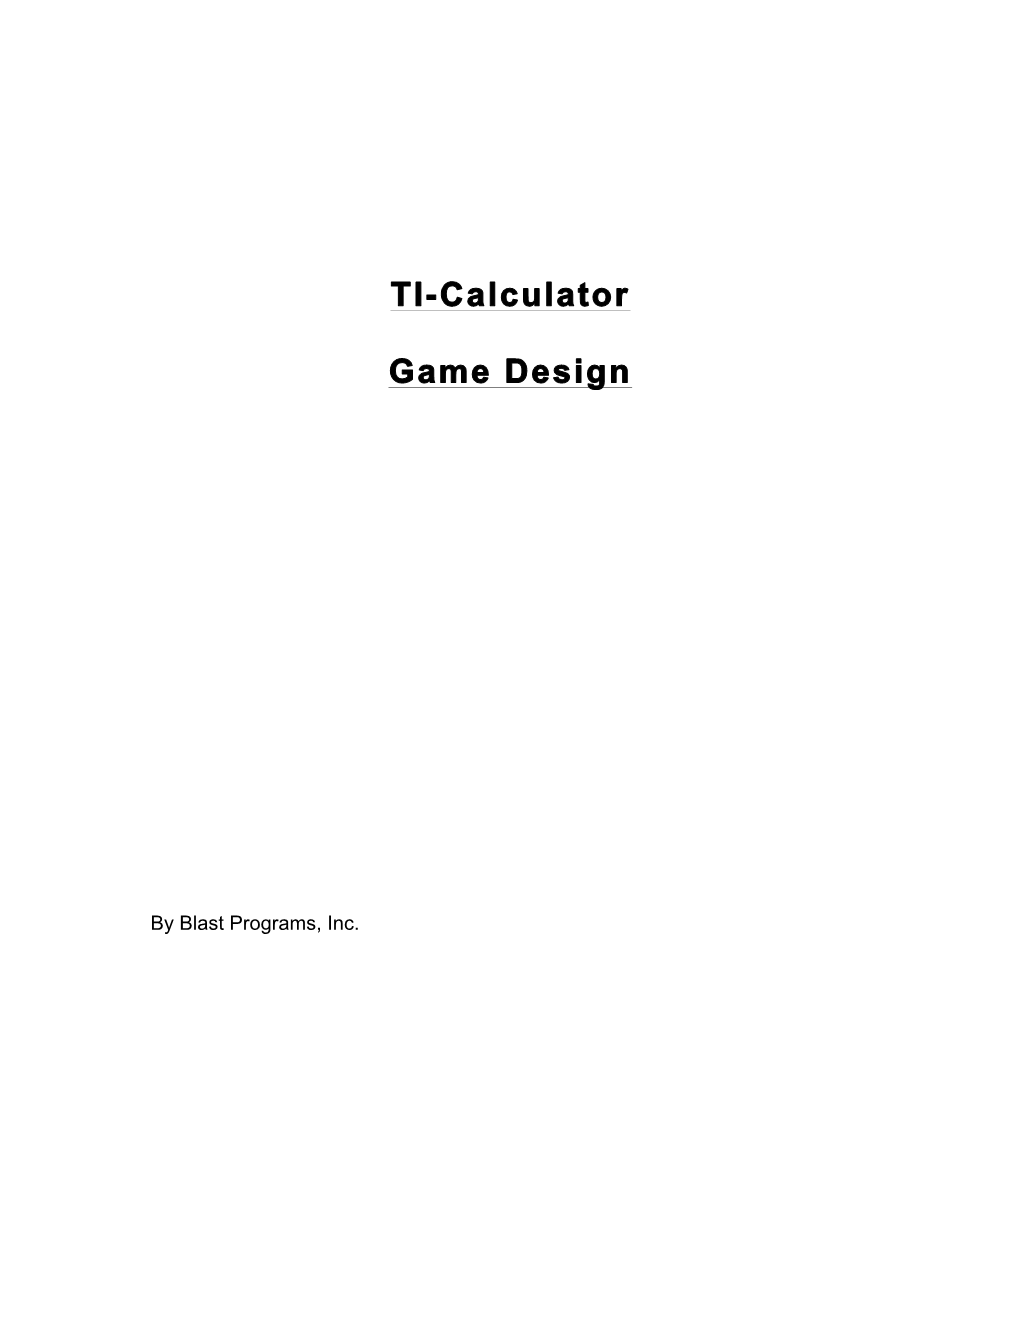 TI-Calculator Game Design